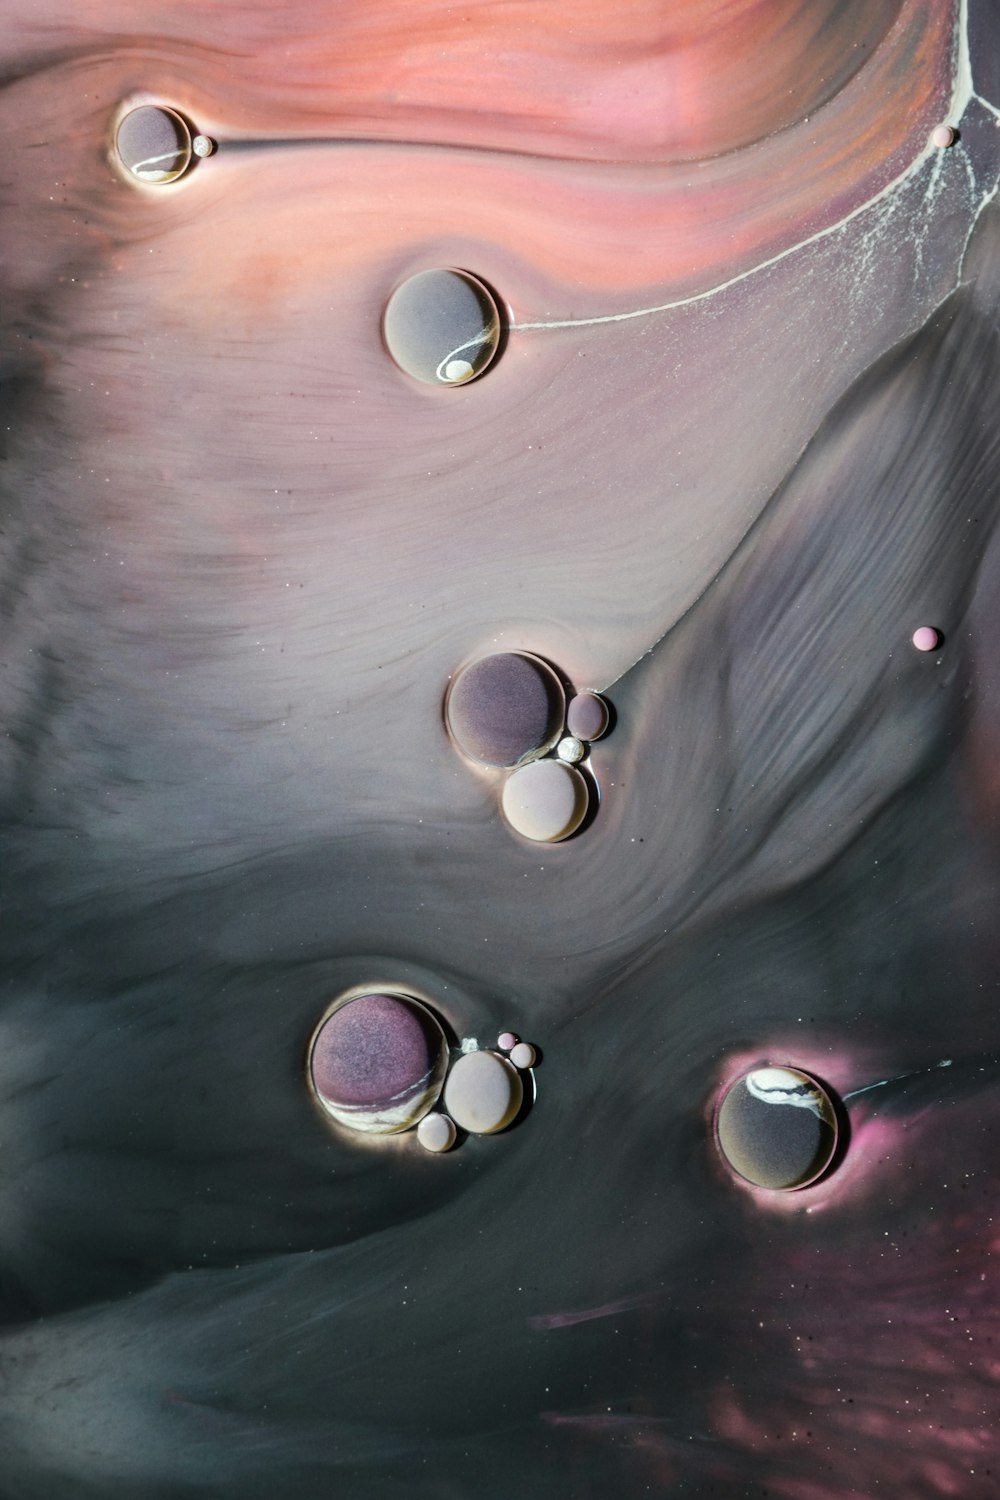 gotículas de água na superfície roxa